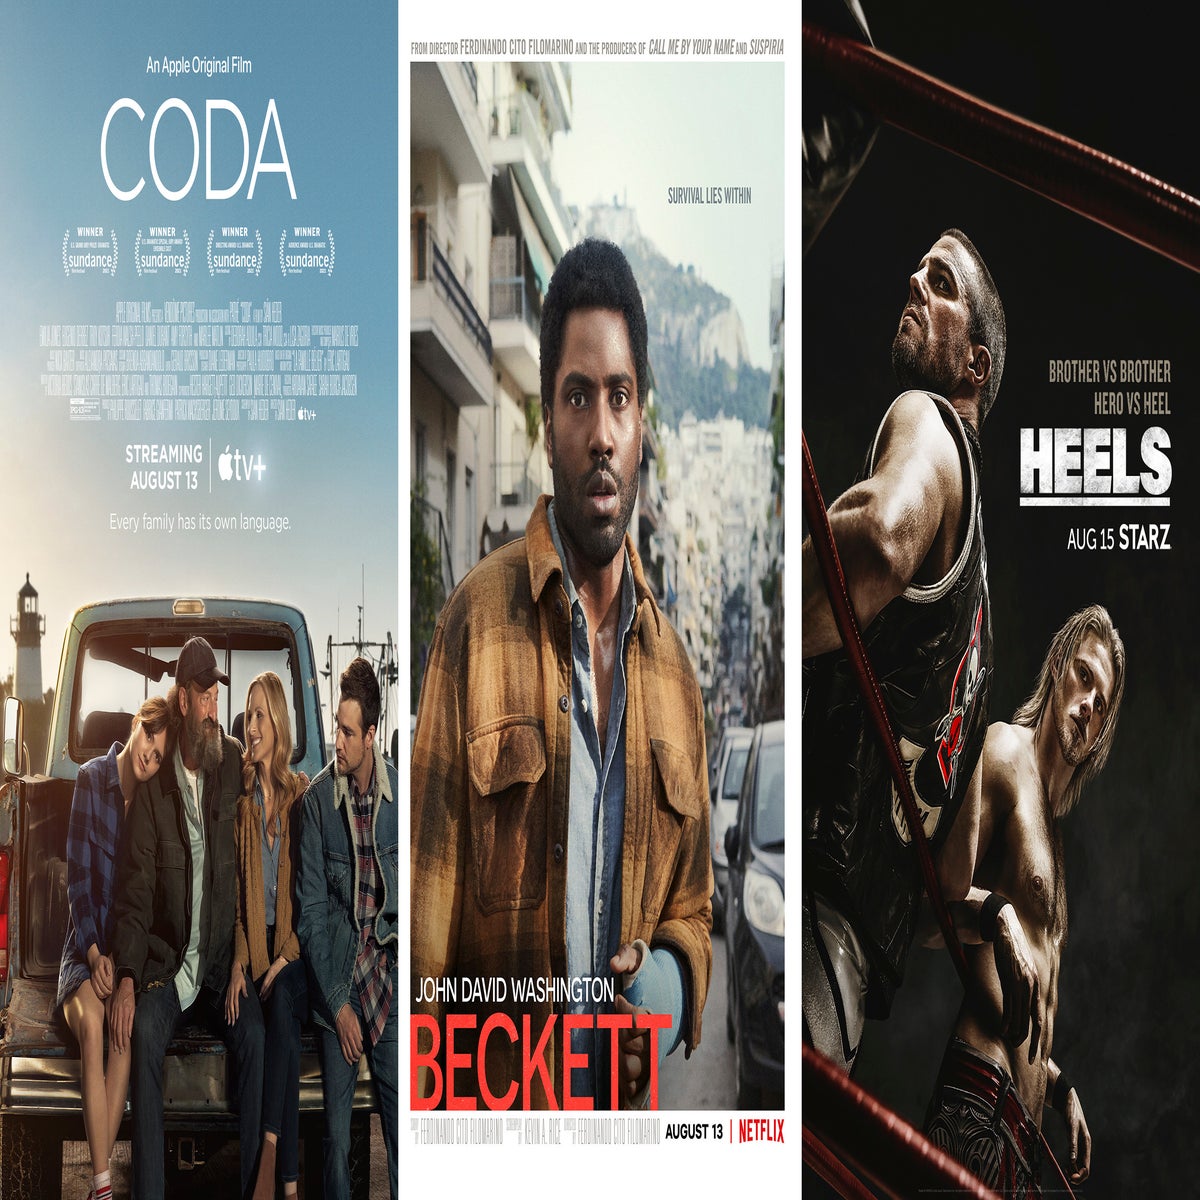 Gloucester-Set Film 'CODA' Debuts At Sundance